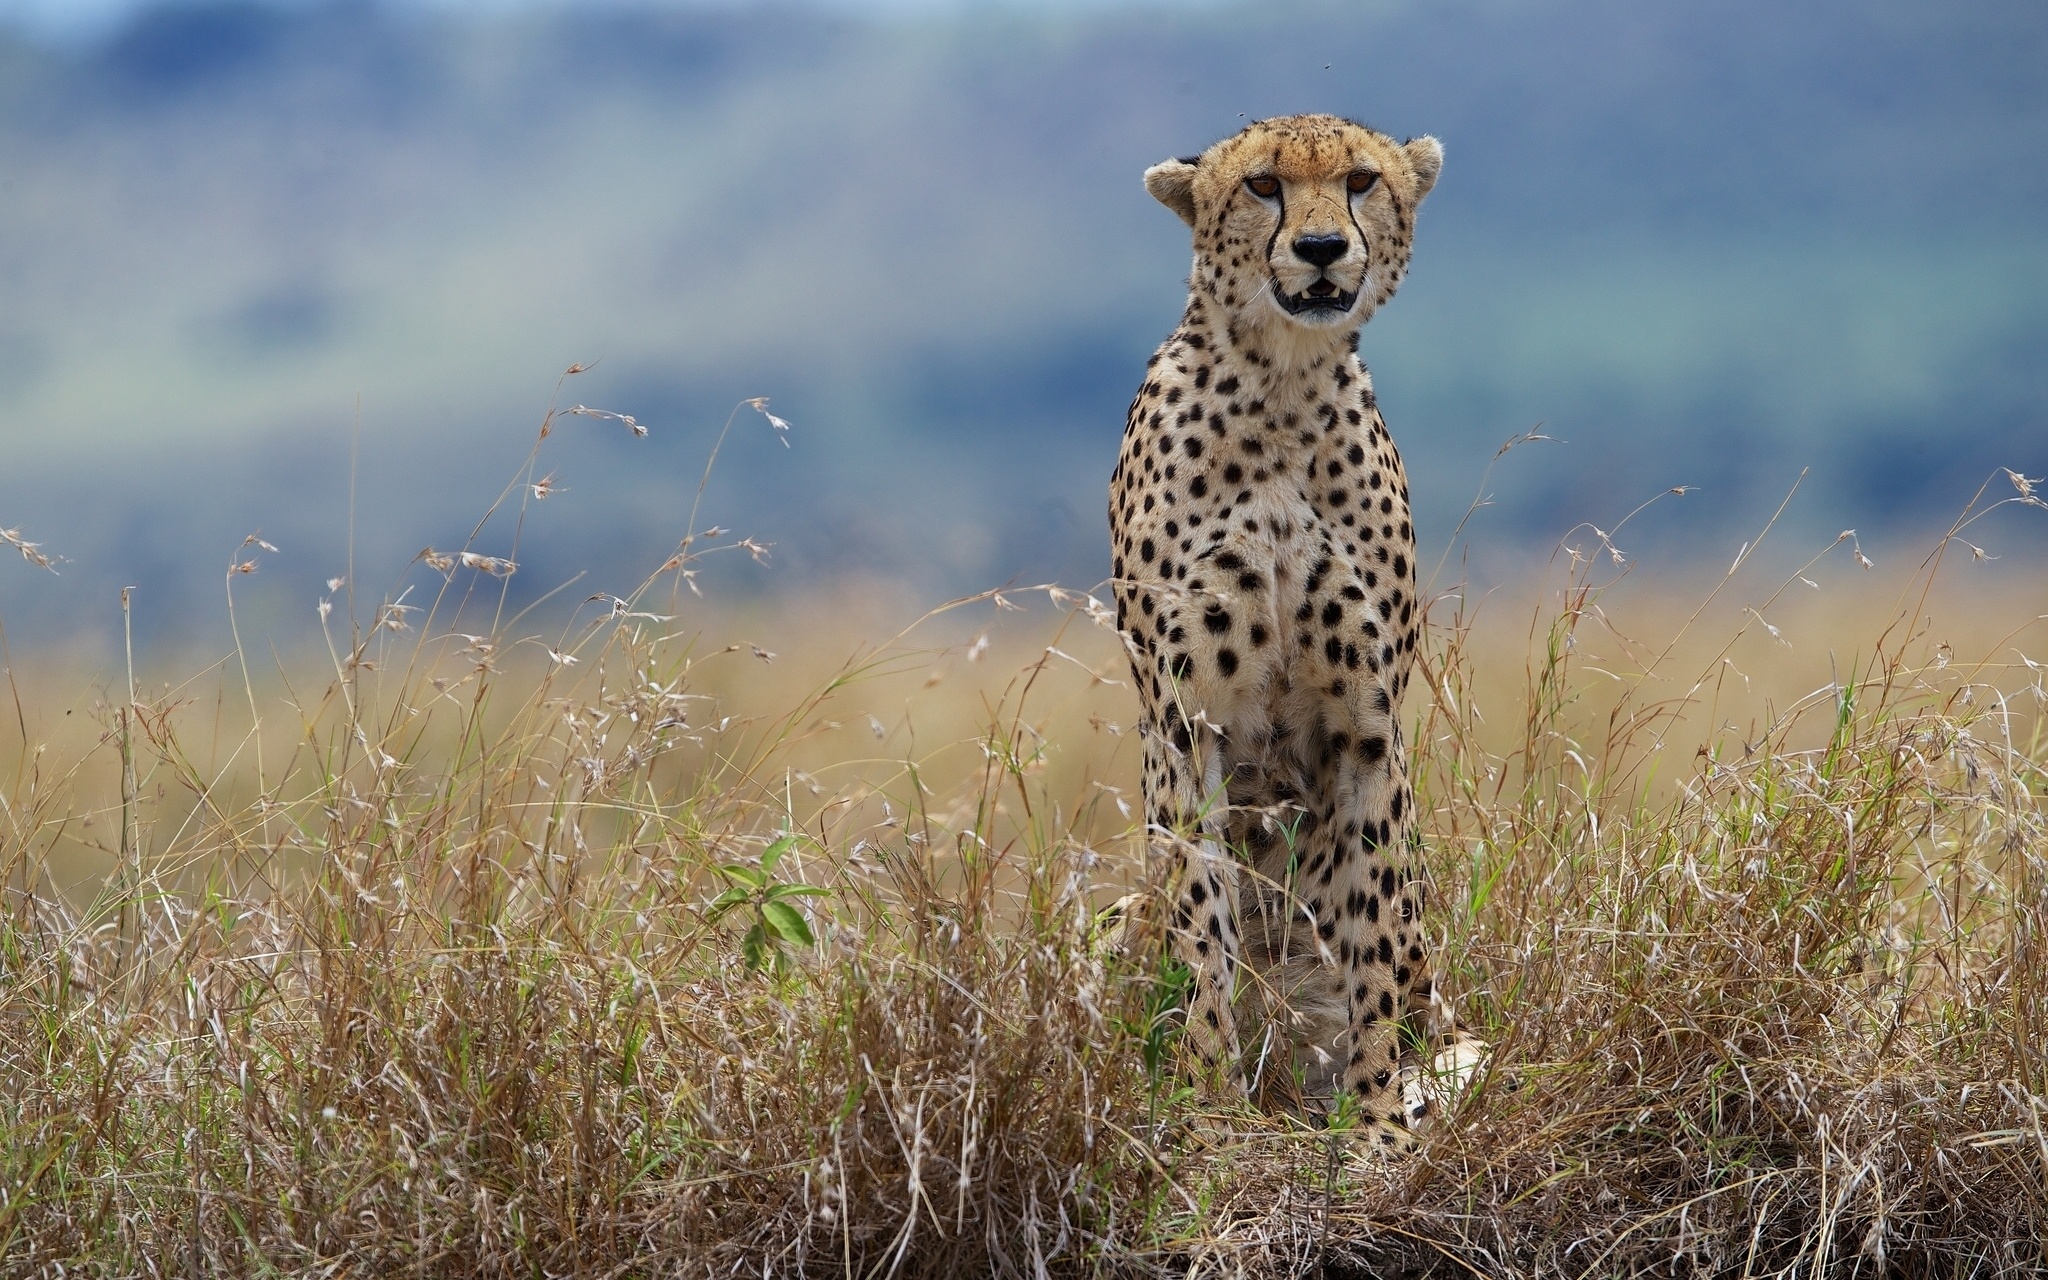 Desktop wallpapers, Big cats collection, Cheetahs in grass, Stunning animal photography, 2050x1280 HD Desktop